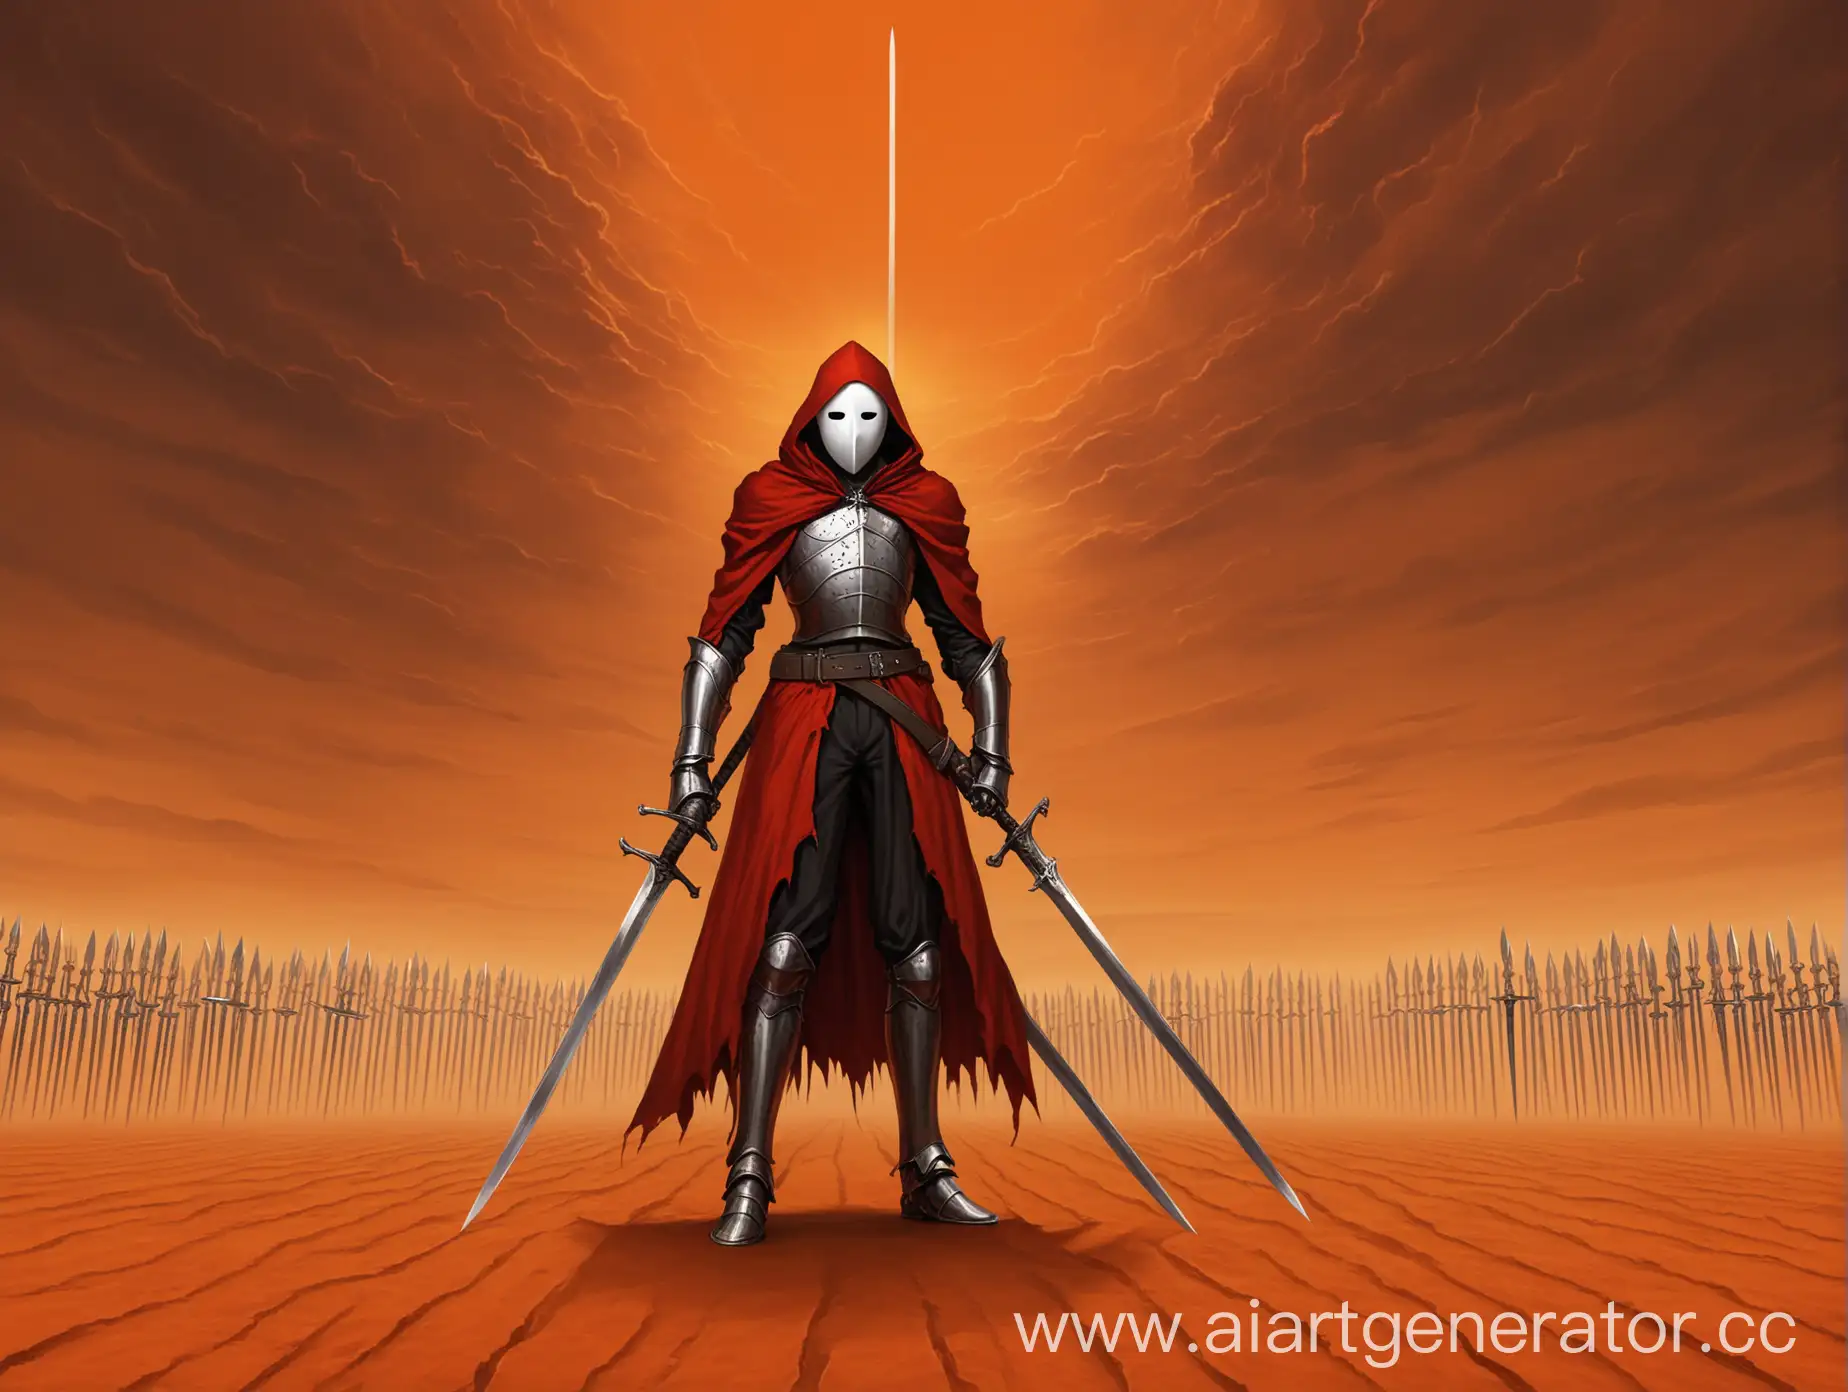 Warrior-in-Red-Cloak-and-Faceless-Mask-Amidst-Swords-in-Orange-Desert